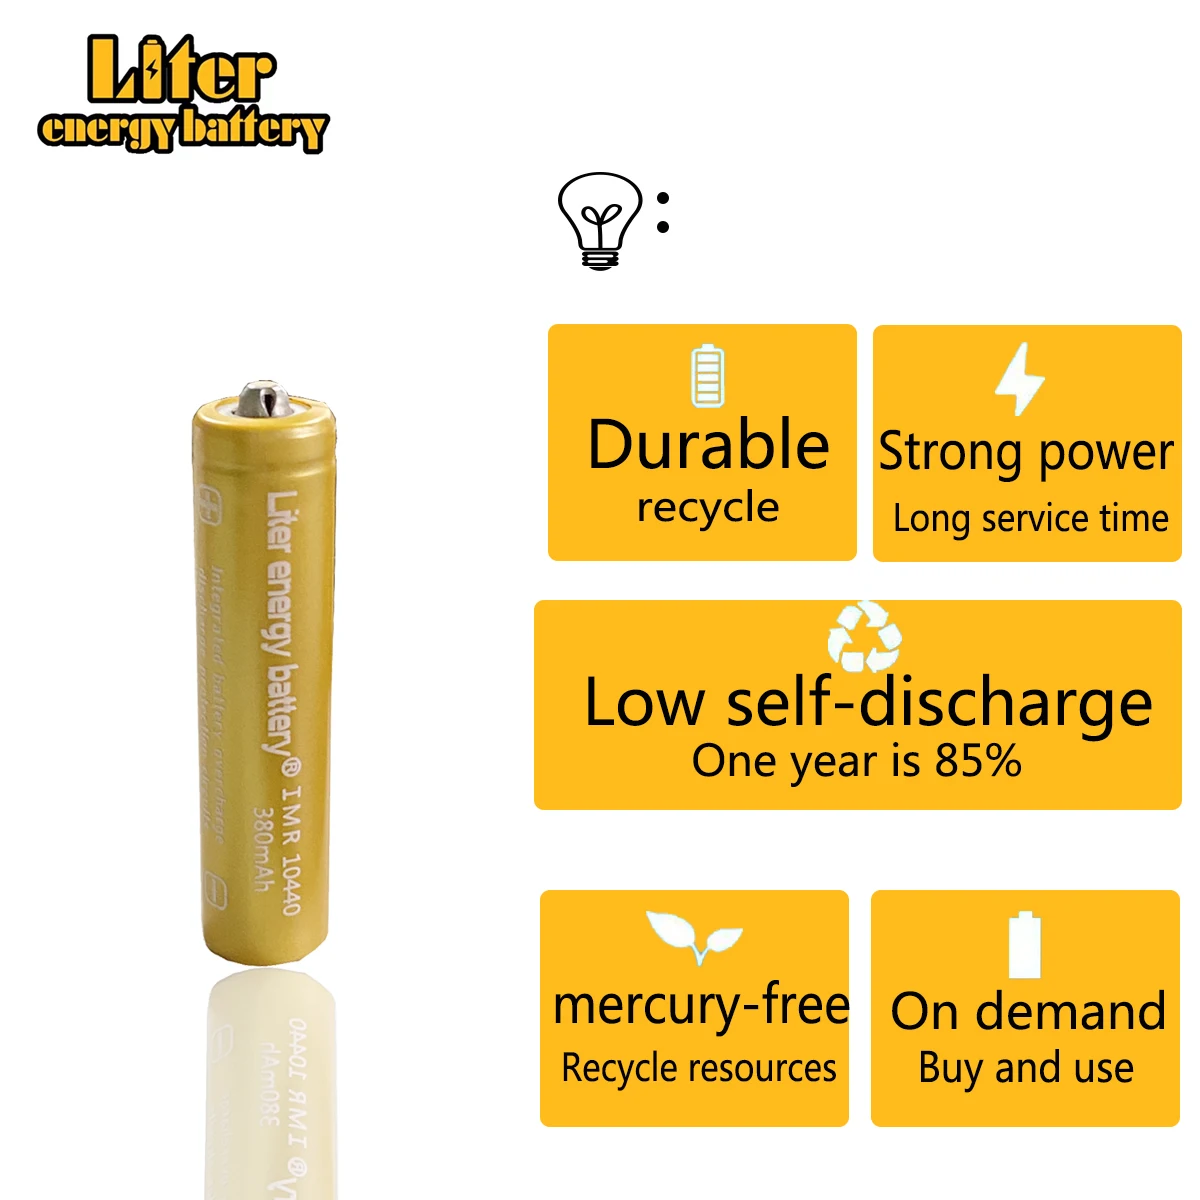 

40pcs Liter energy battery 3.7V 380mAh High Capacity 10440 Li-ion Rechargeable AAA Battery for LED Flashlights Headlamps